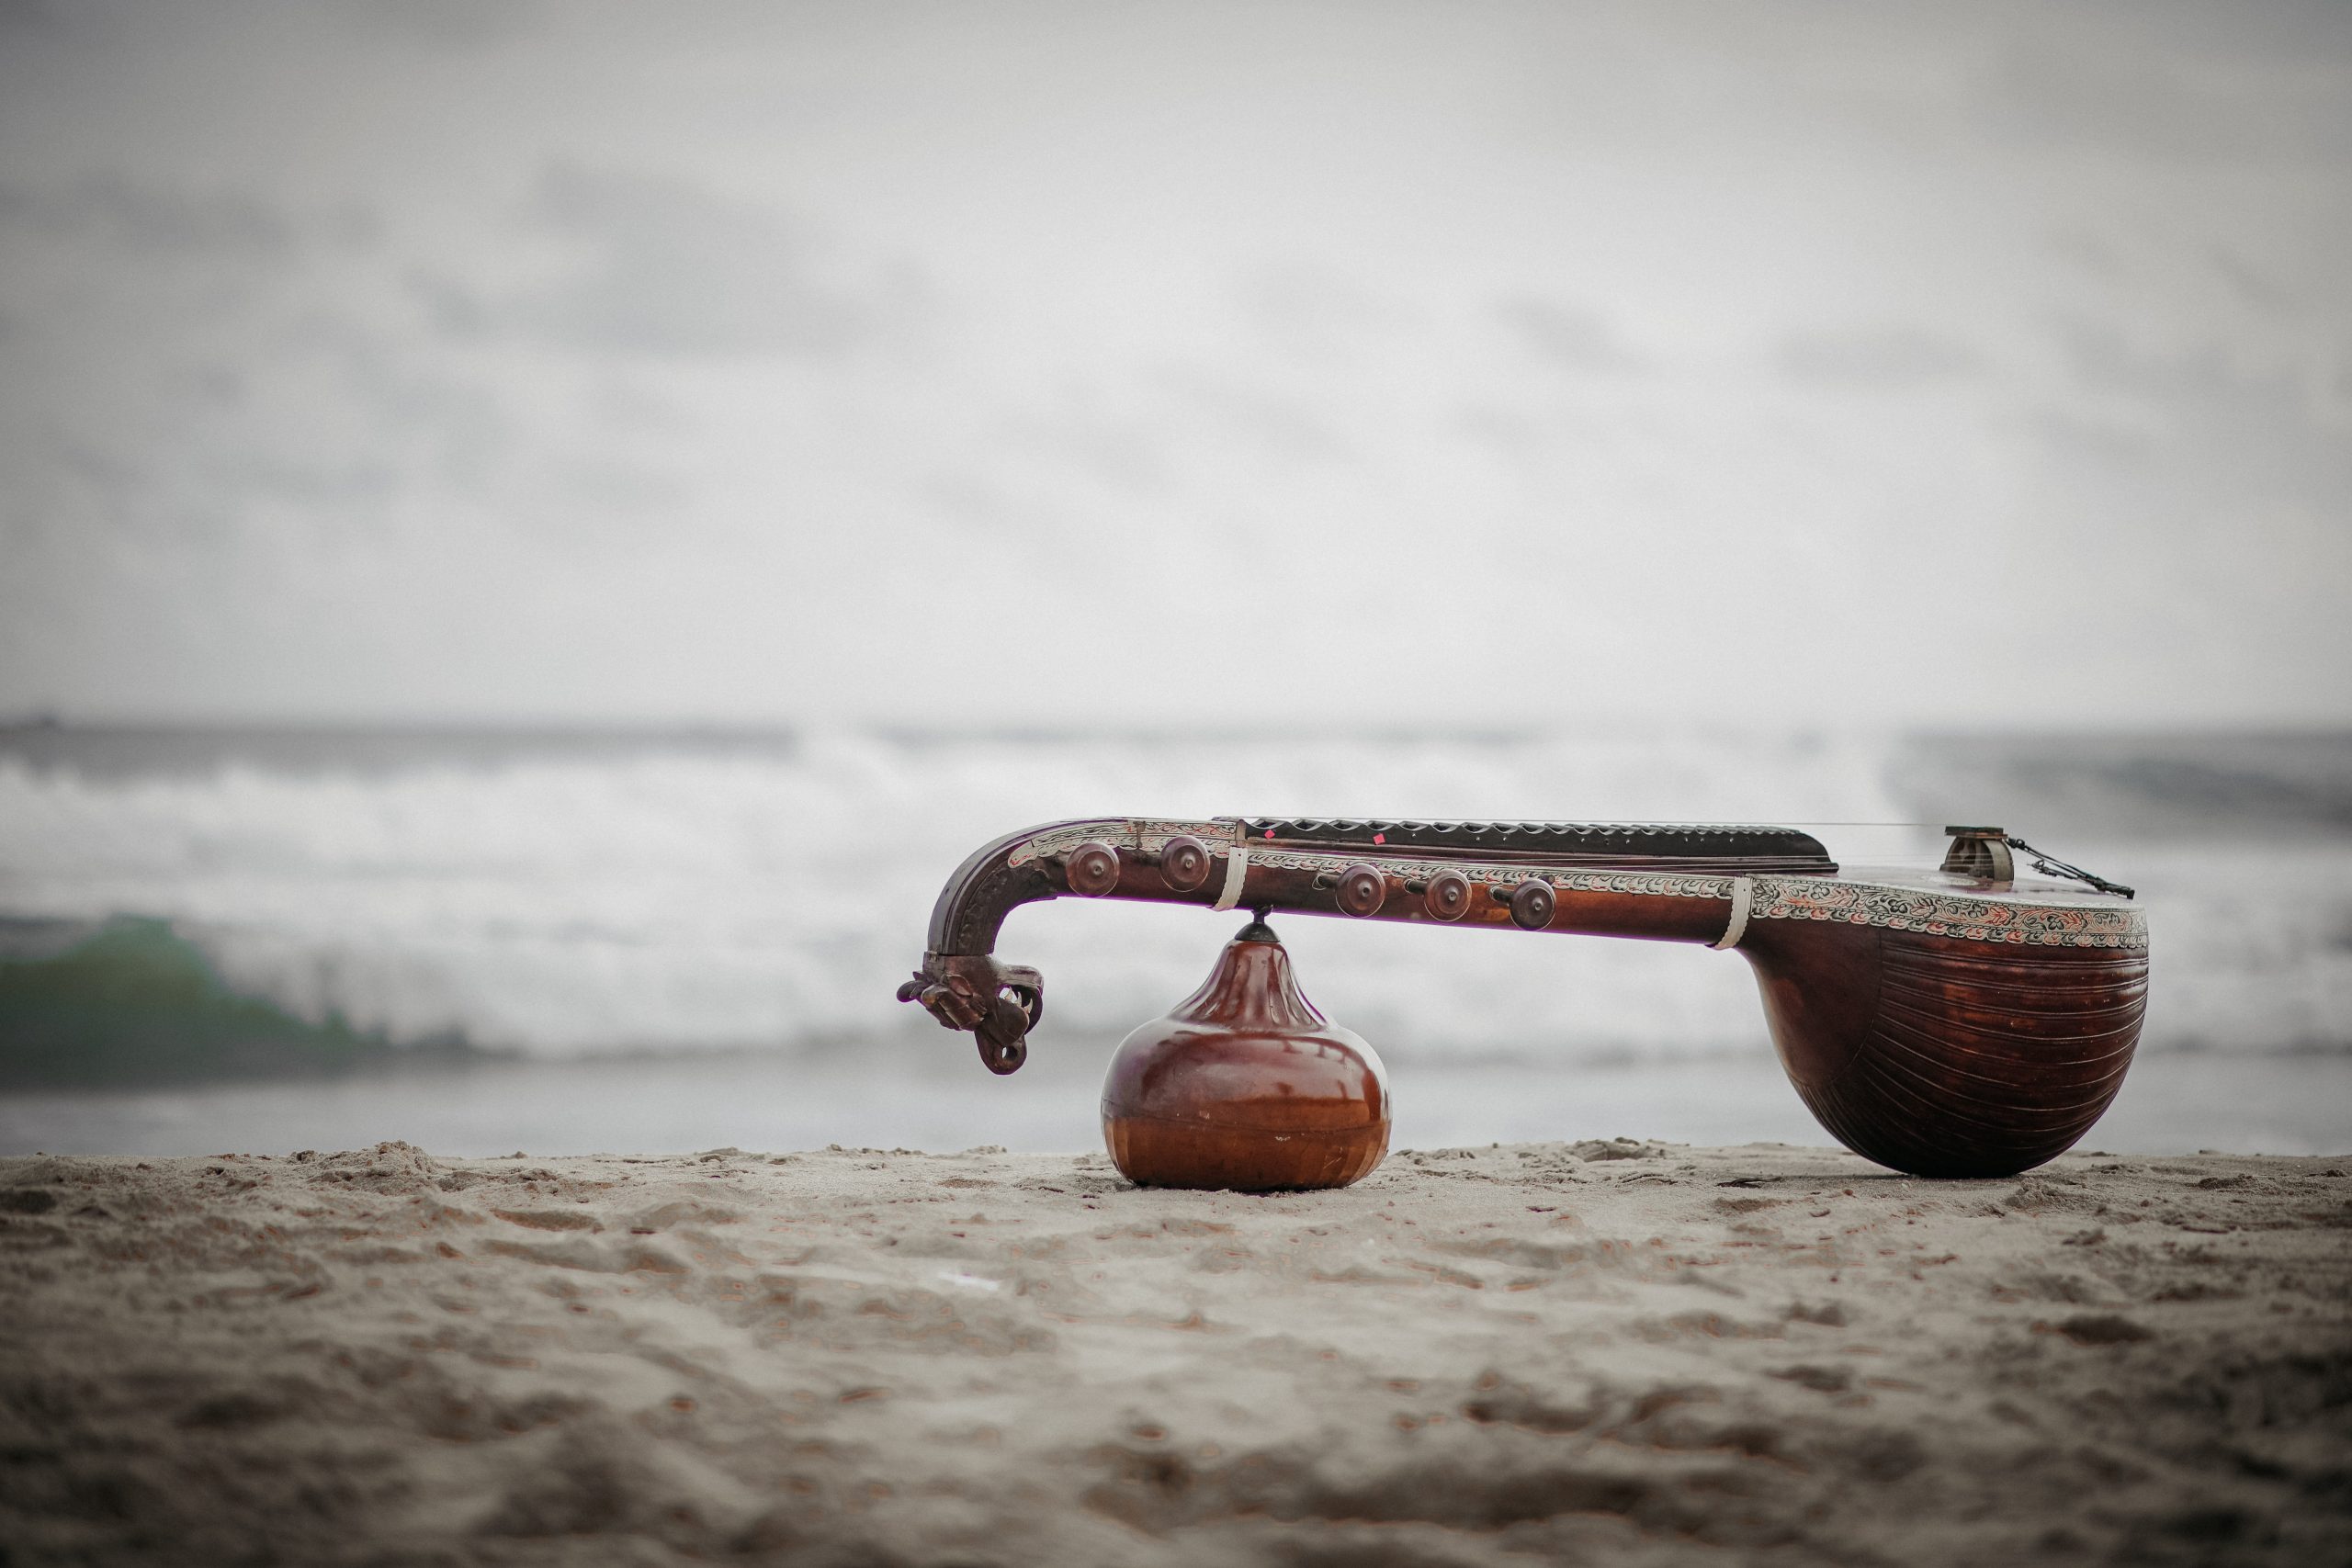 Musical Instrument Veena on a beach